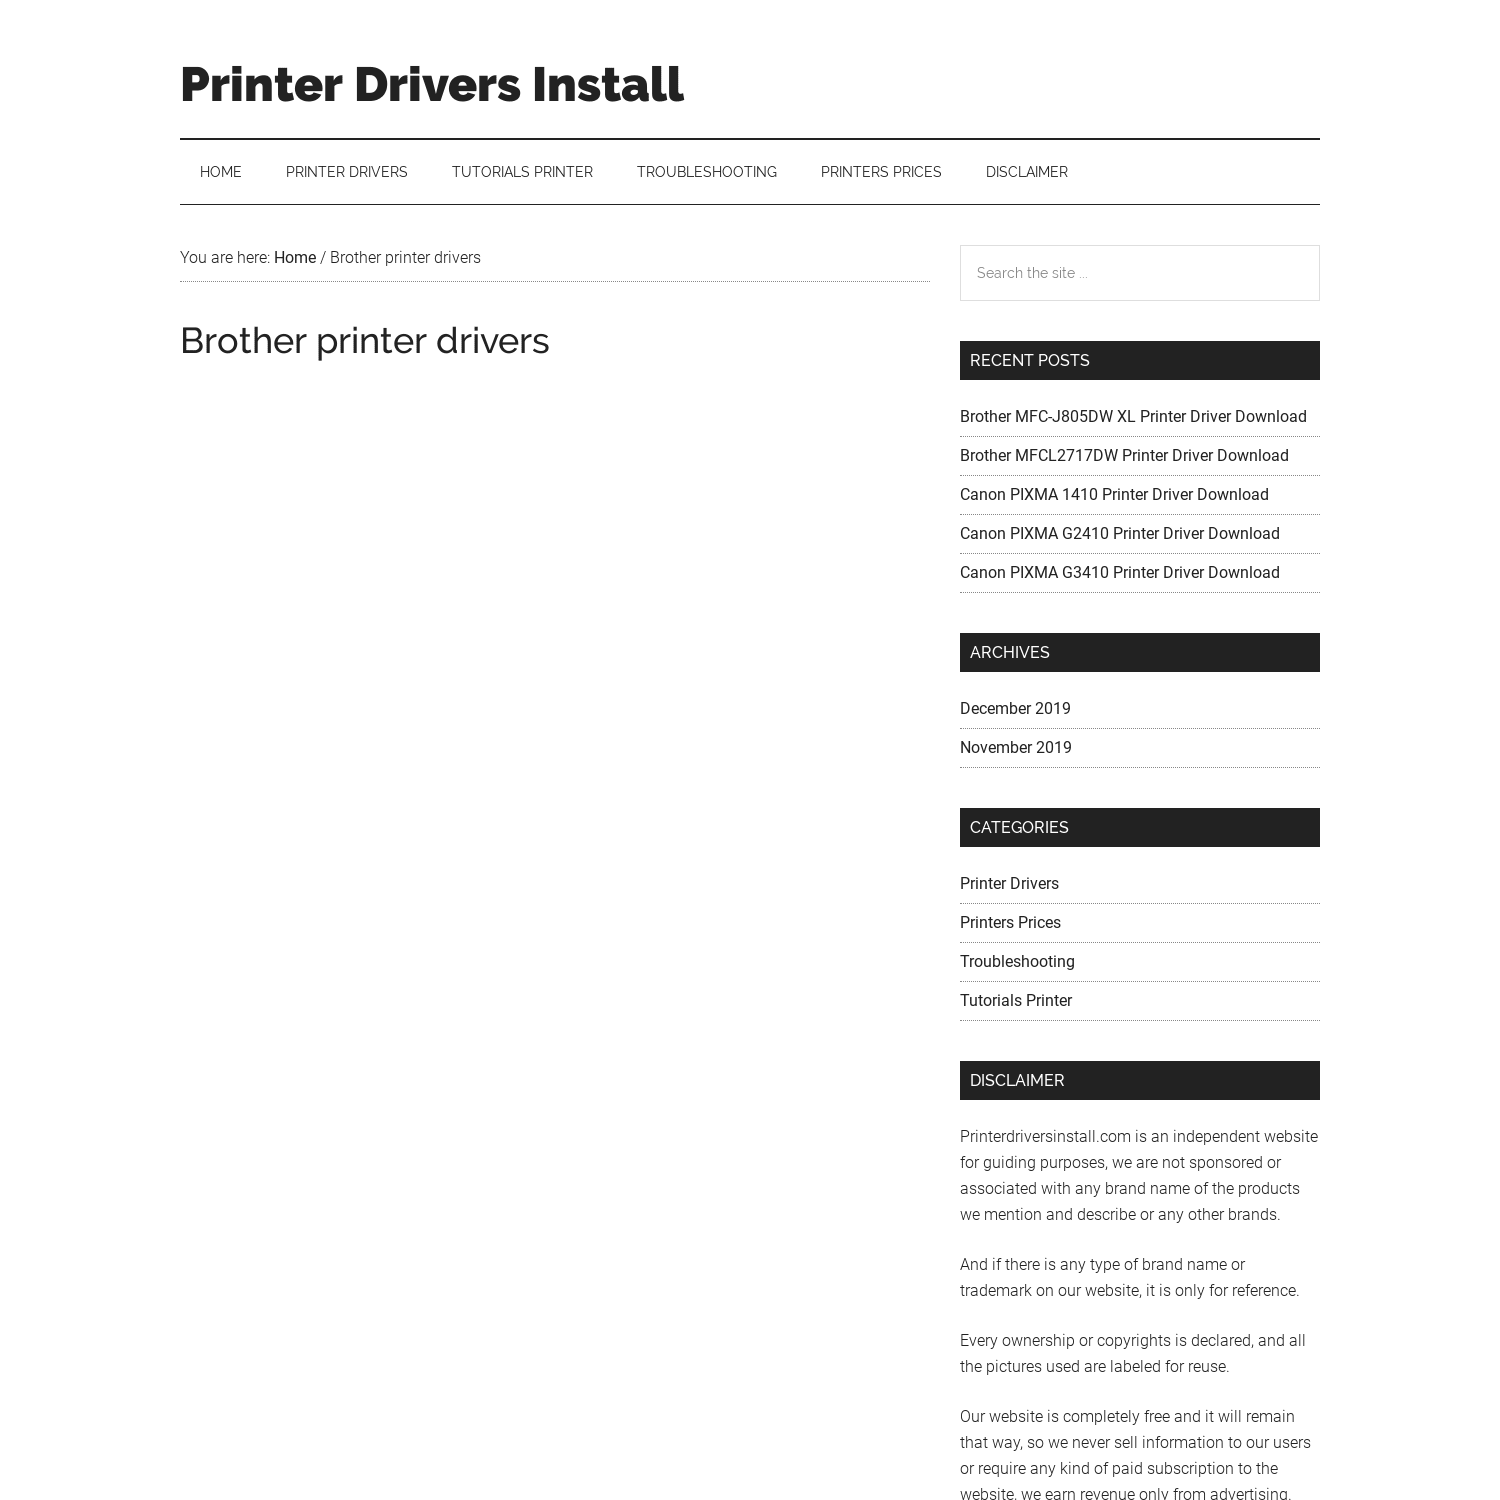 Brother printer drivers - Printer Drivers Install